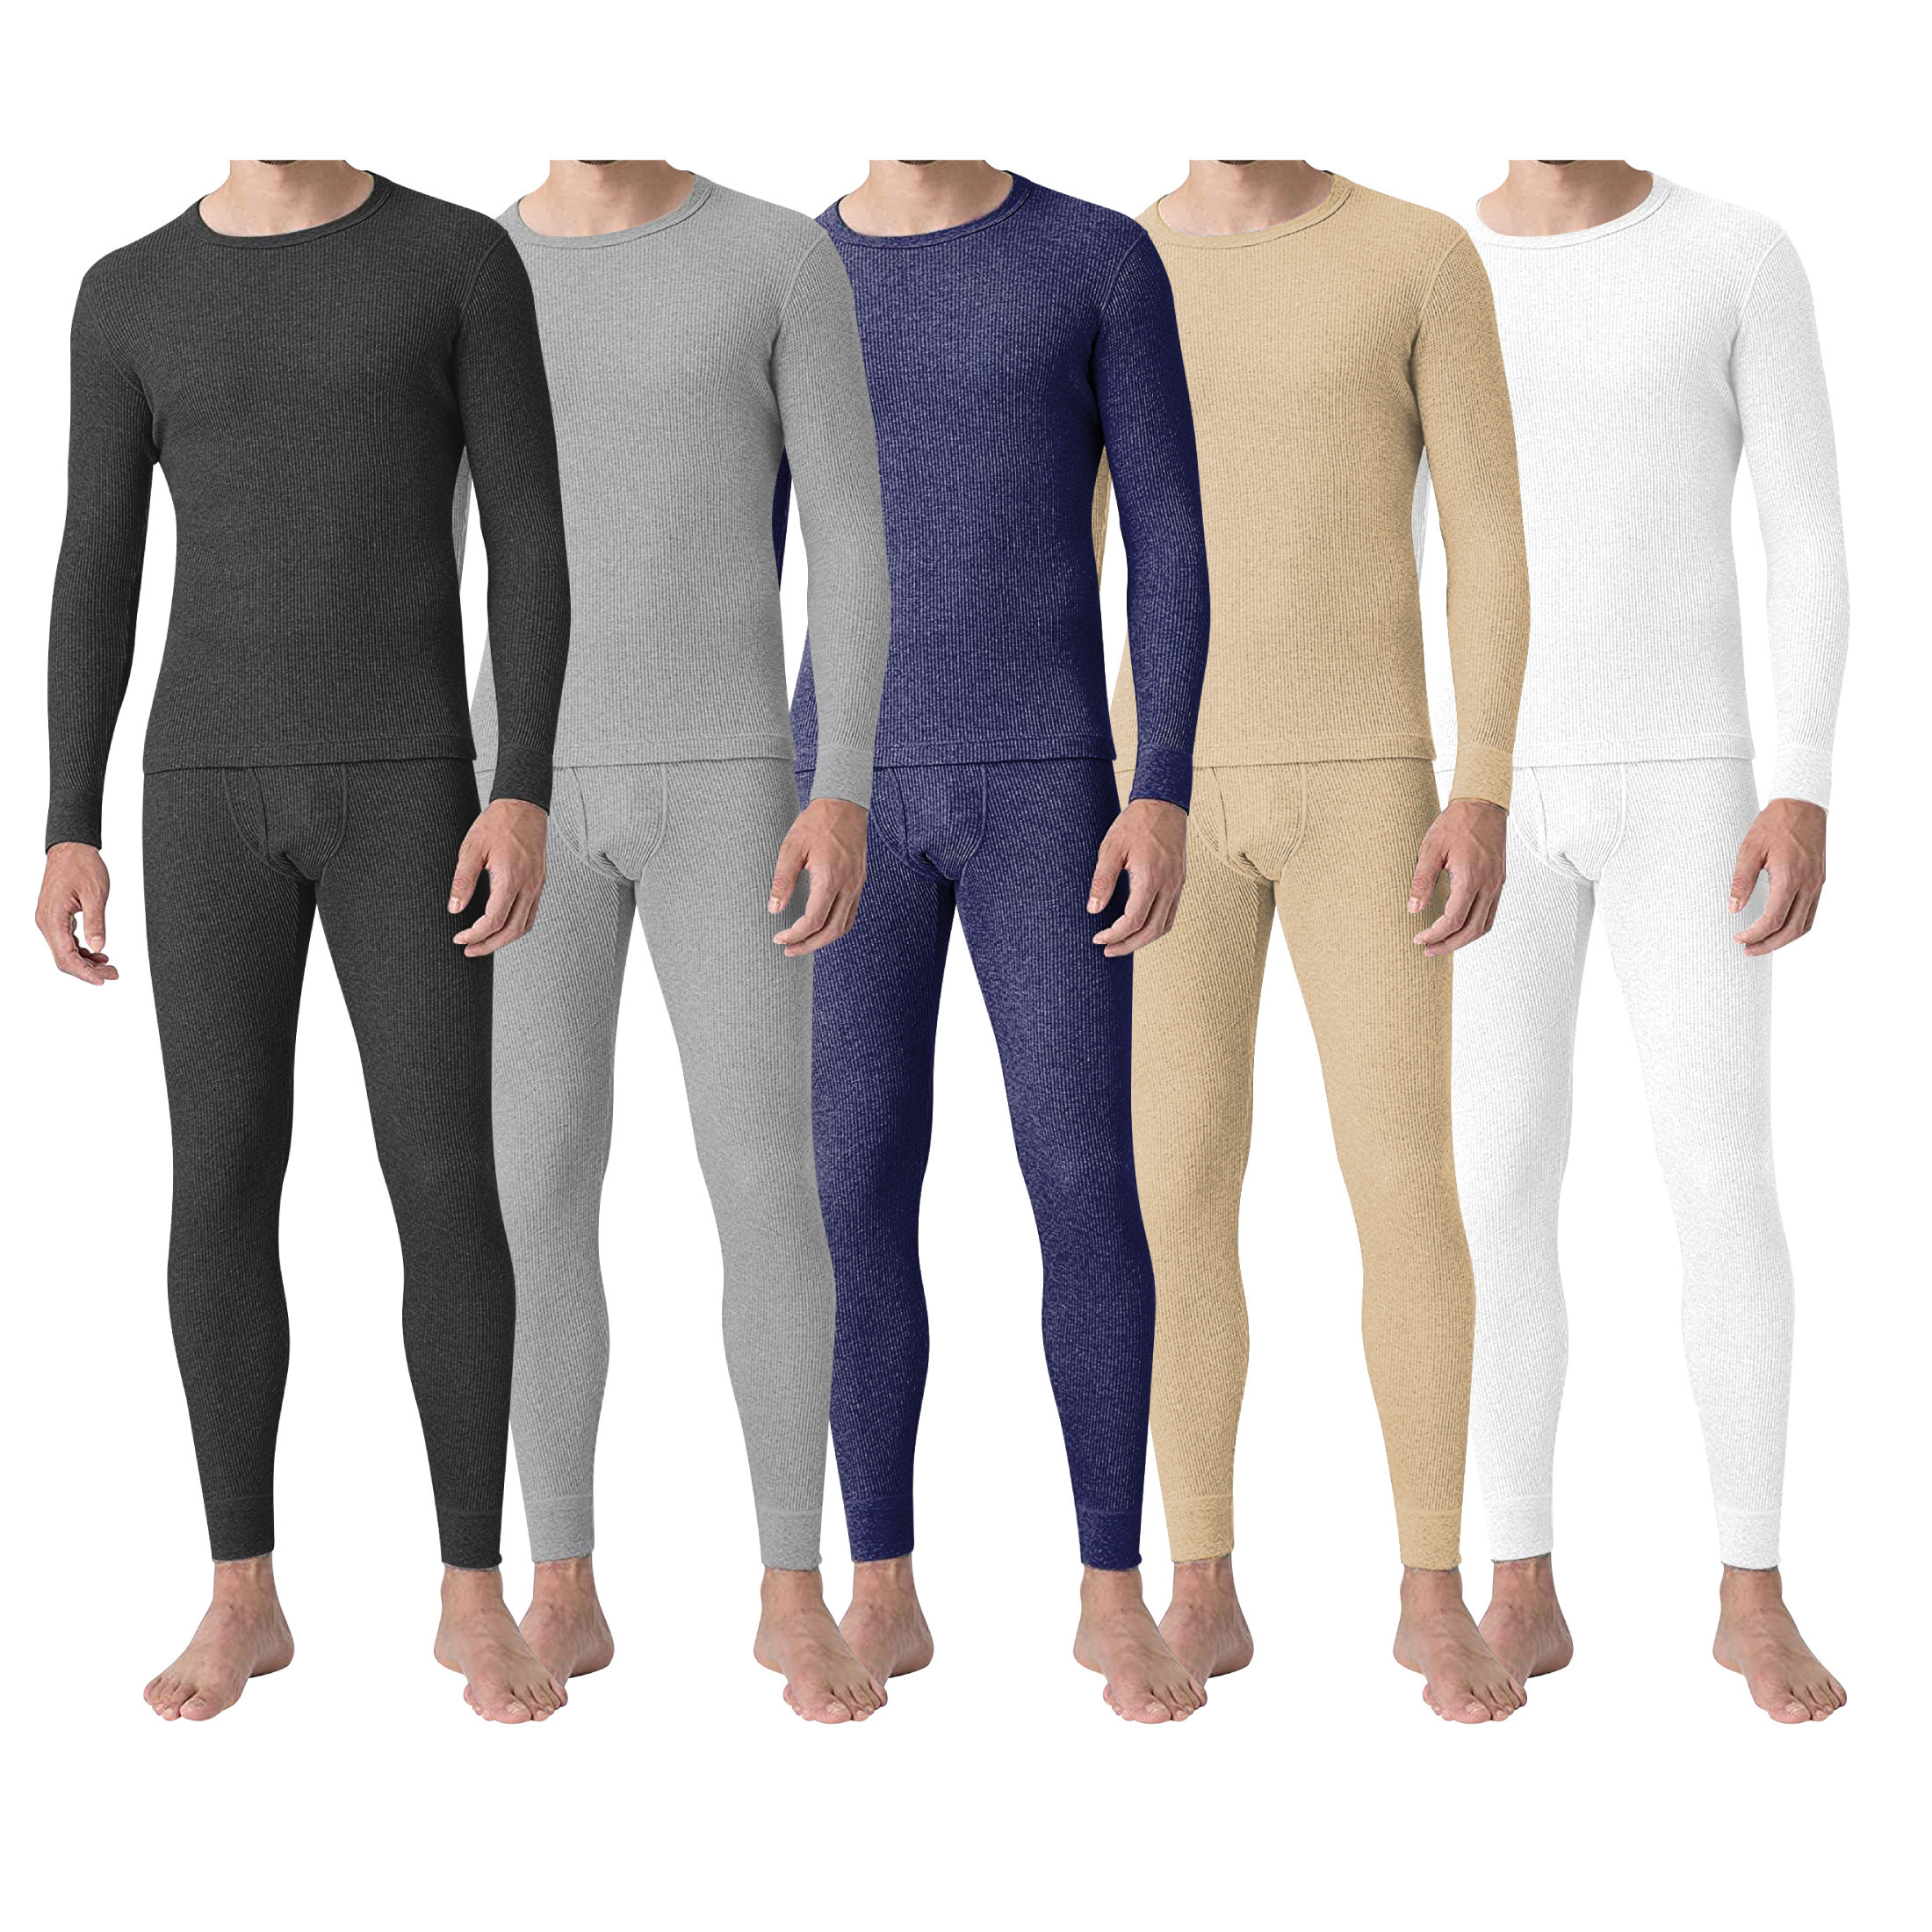 2-Piece: Men's Super Soft Cotton Waffle Knit Winter Thermal Underwear Set - Tan, Medium